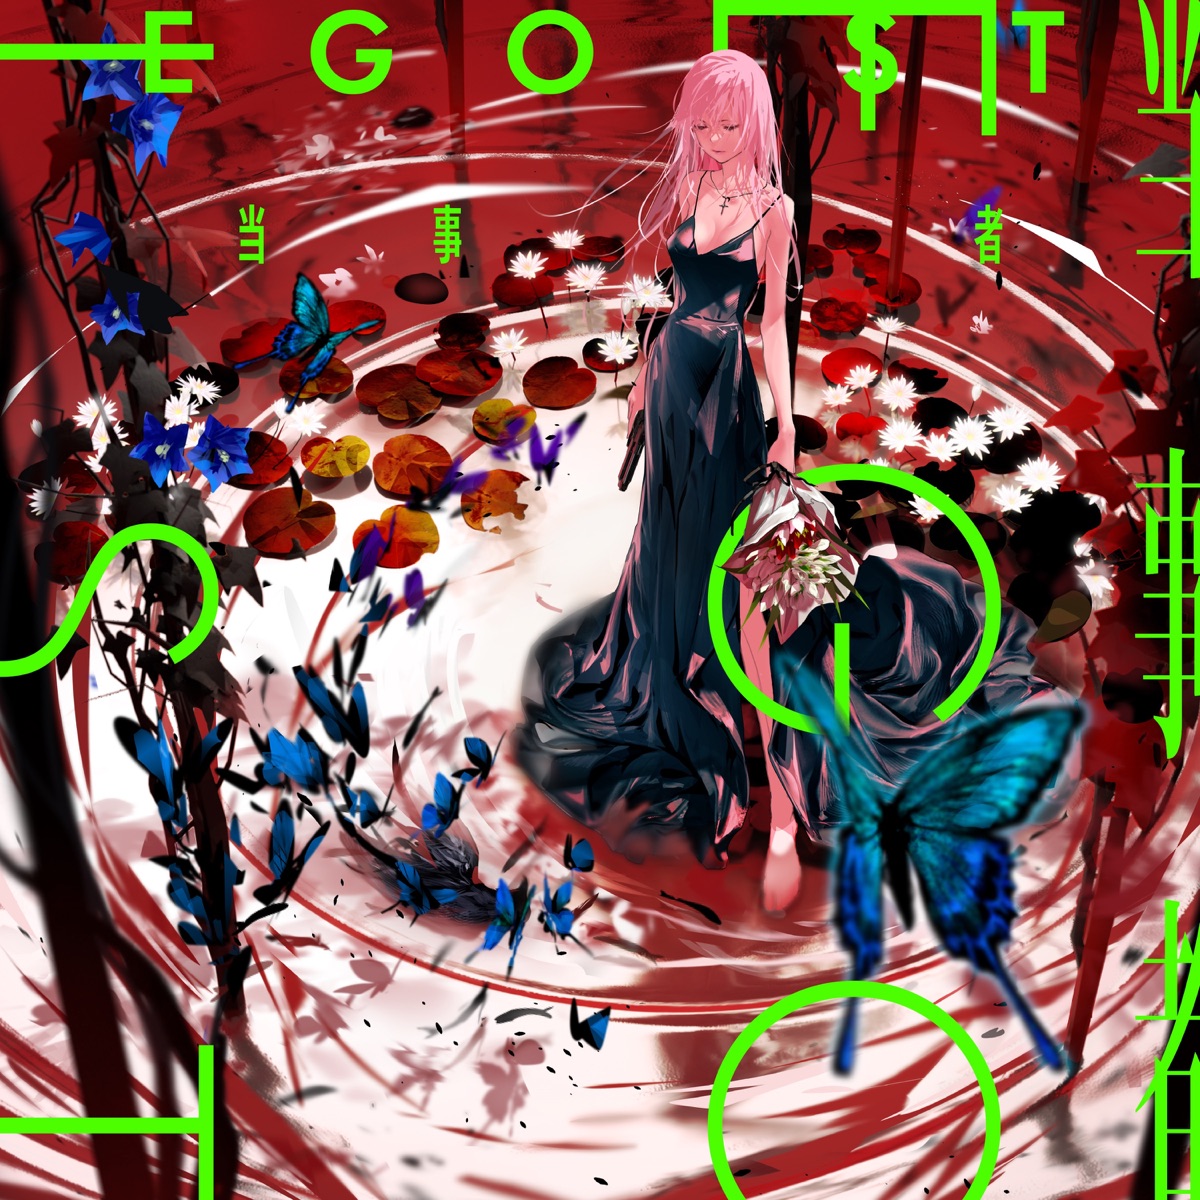 Cover art for『EGOIST - 当事者』from the release『Toujisha